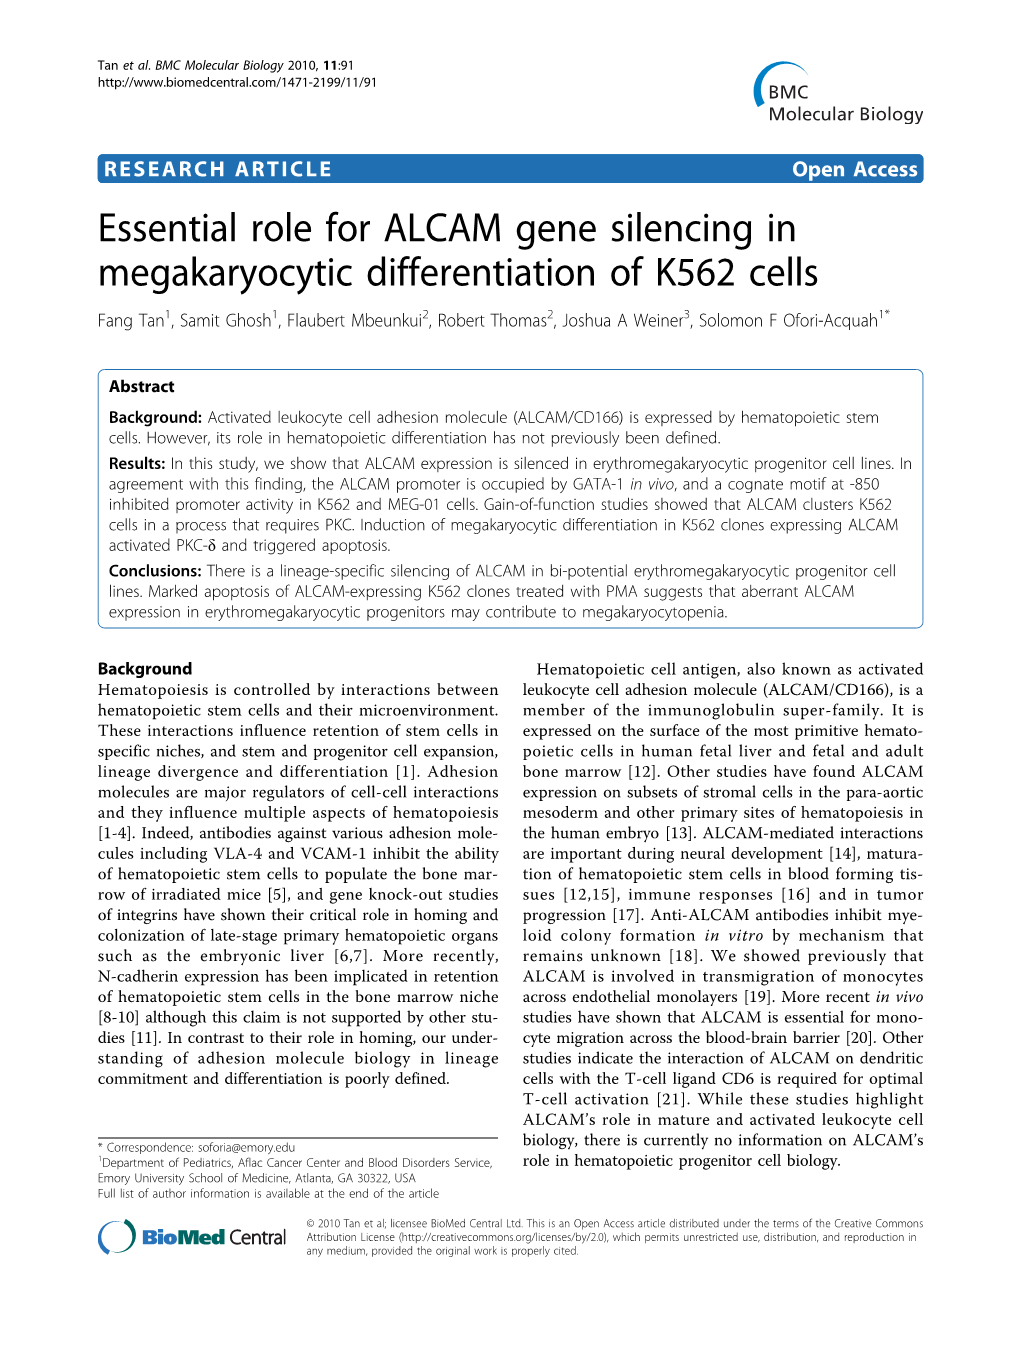 Essential Role for ALCAM Gene Silencing in Megakaryocytic